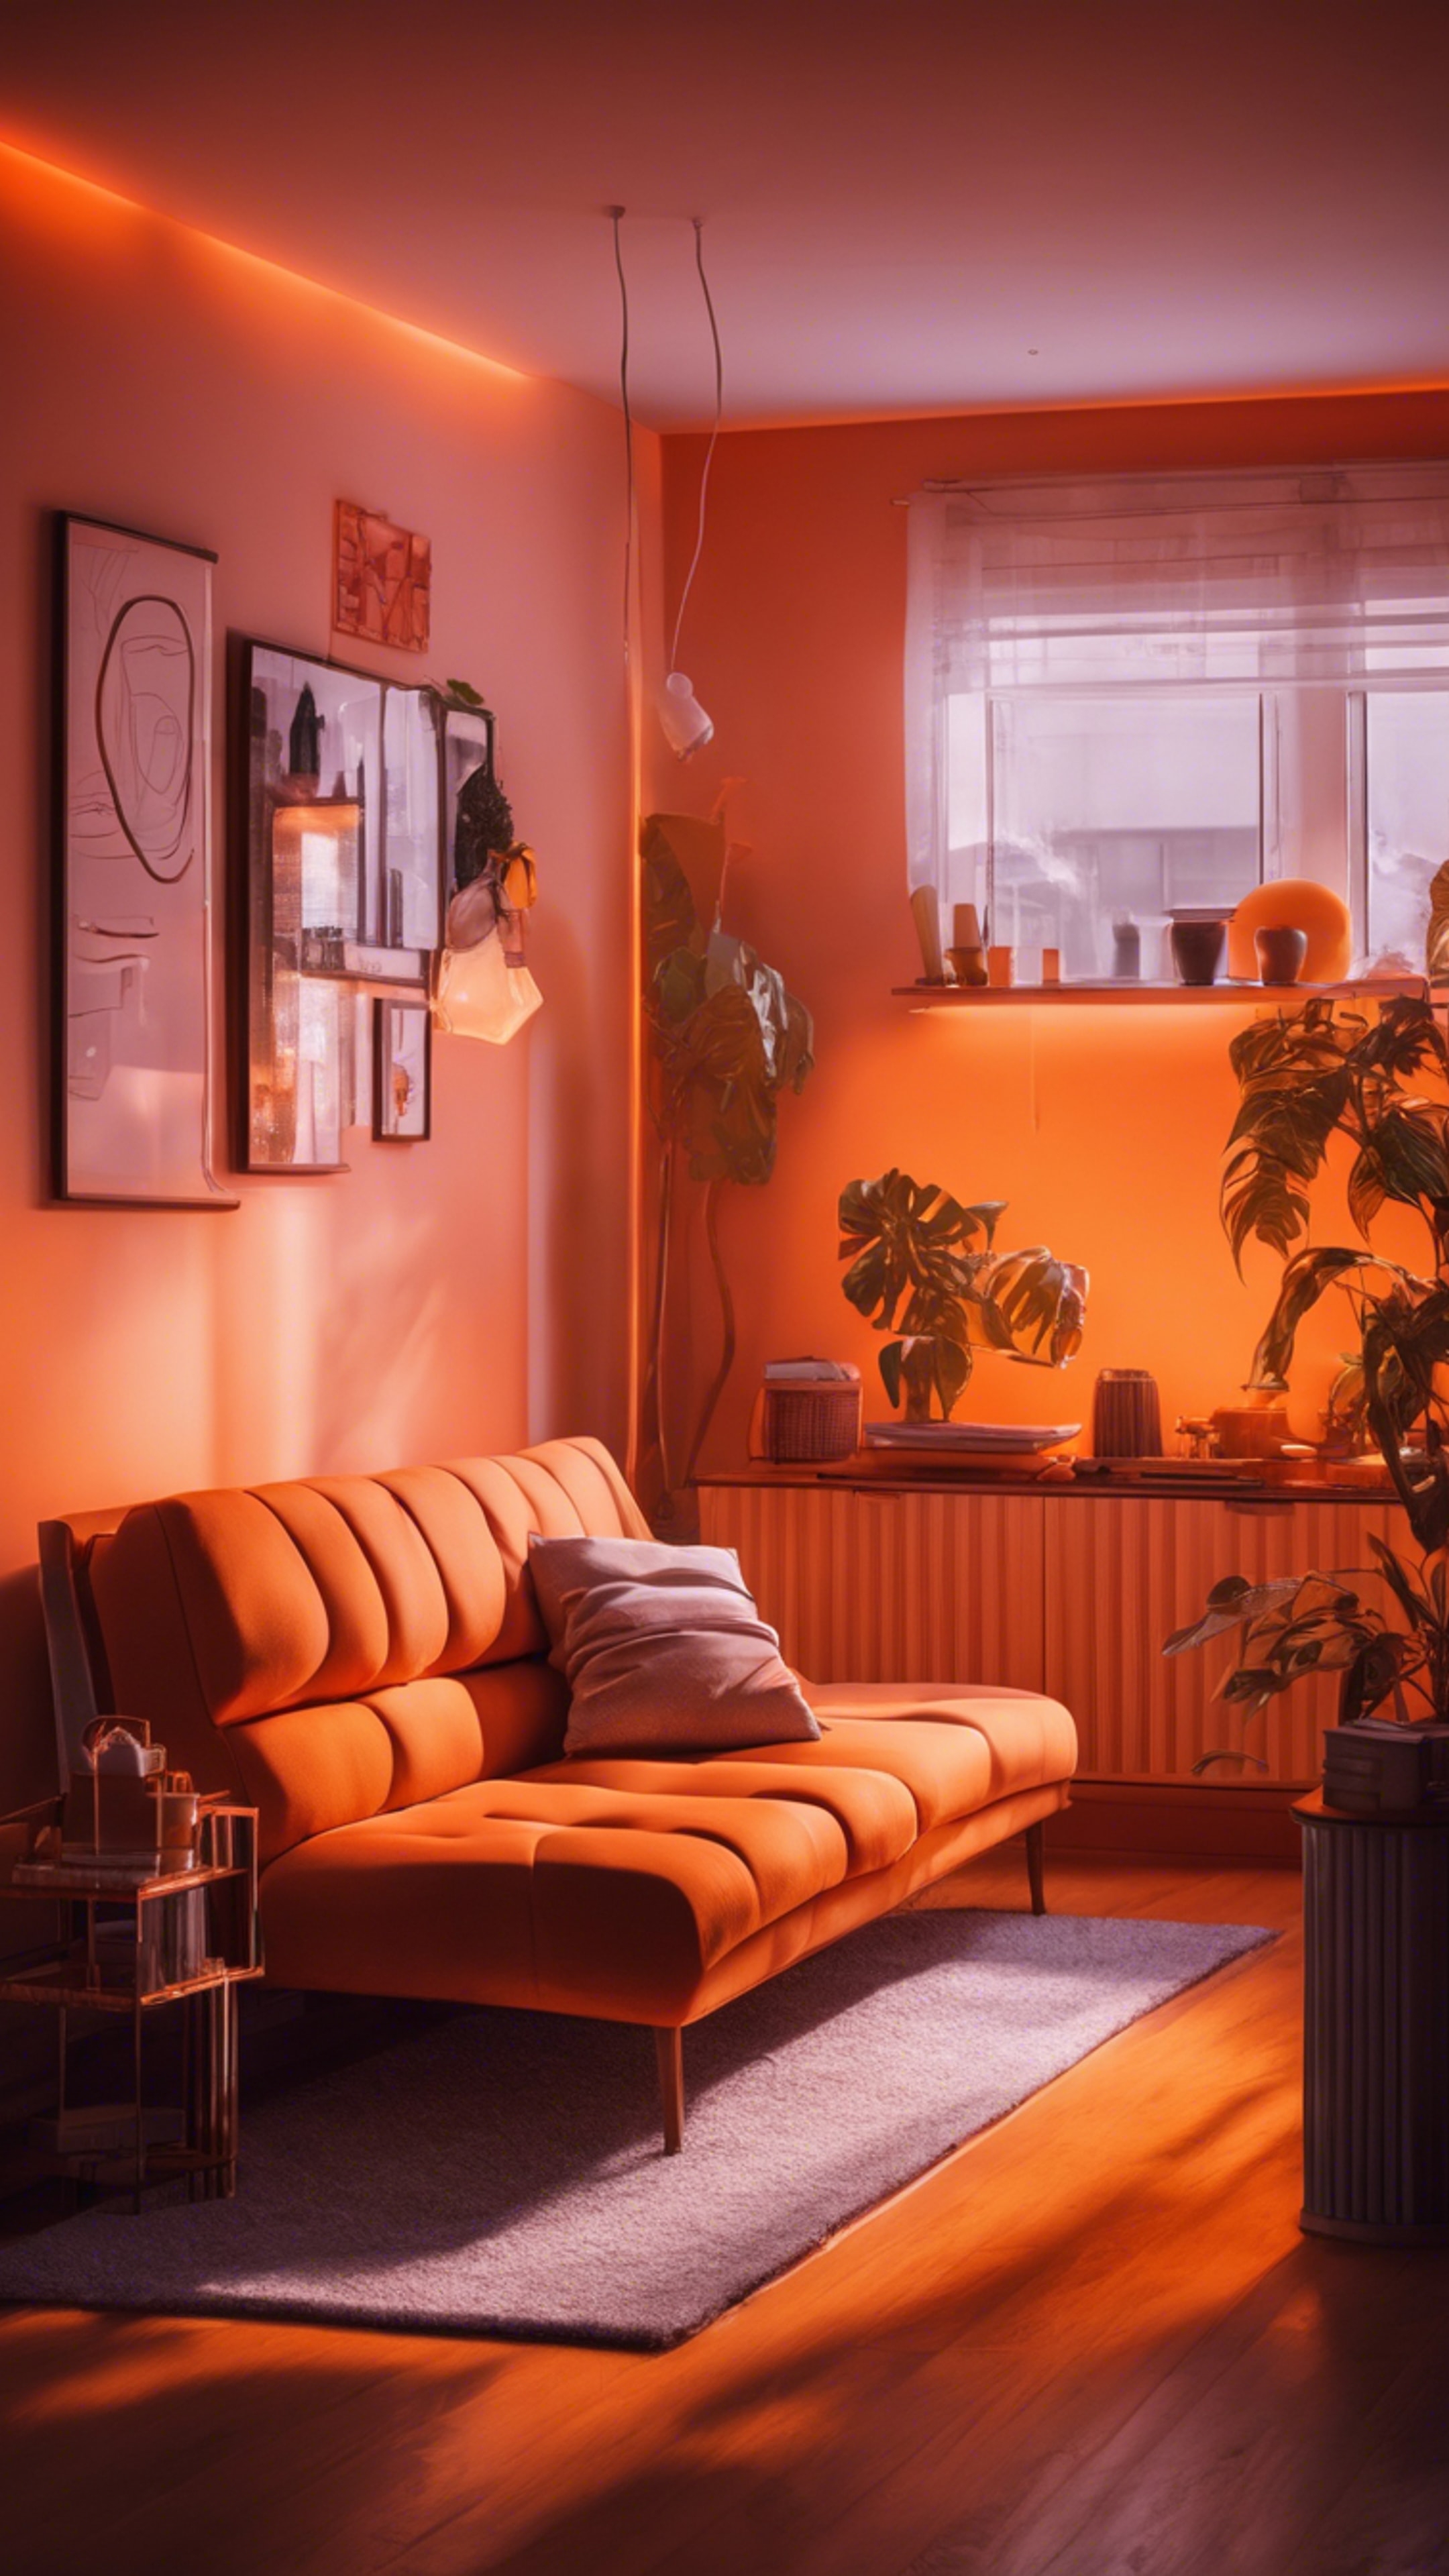 A fresh orange living room with trendy neon lights casting beautiful shadows. Wallpaper[39213640e9864c1aa0c4]